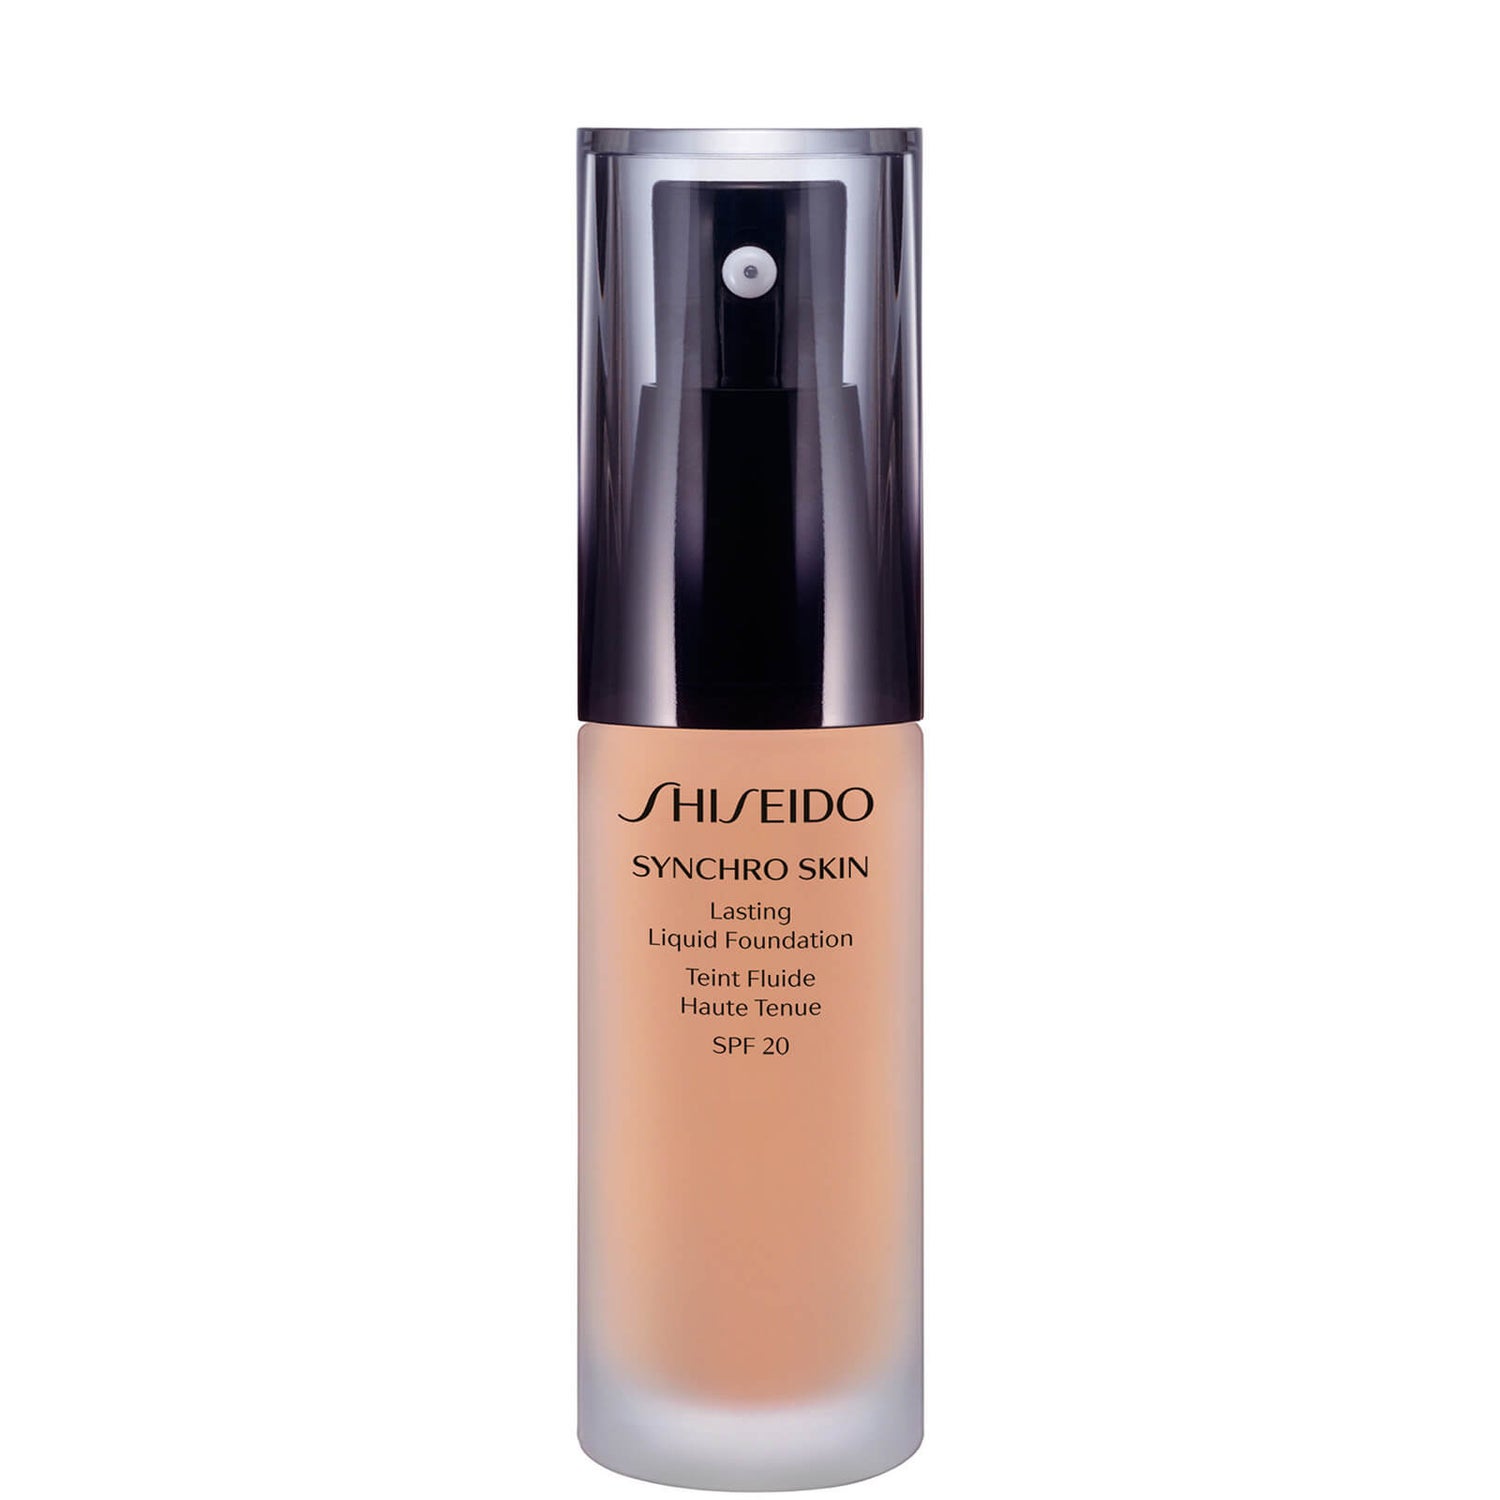 Synchro Skin Lasting Liquid Foundation SPF20 de Shiseido (30ml) (Différentes teintes)